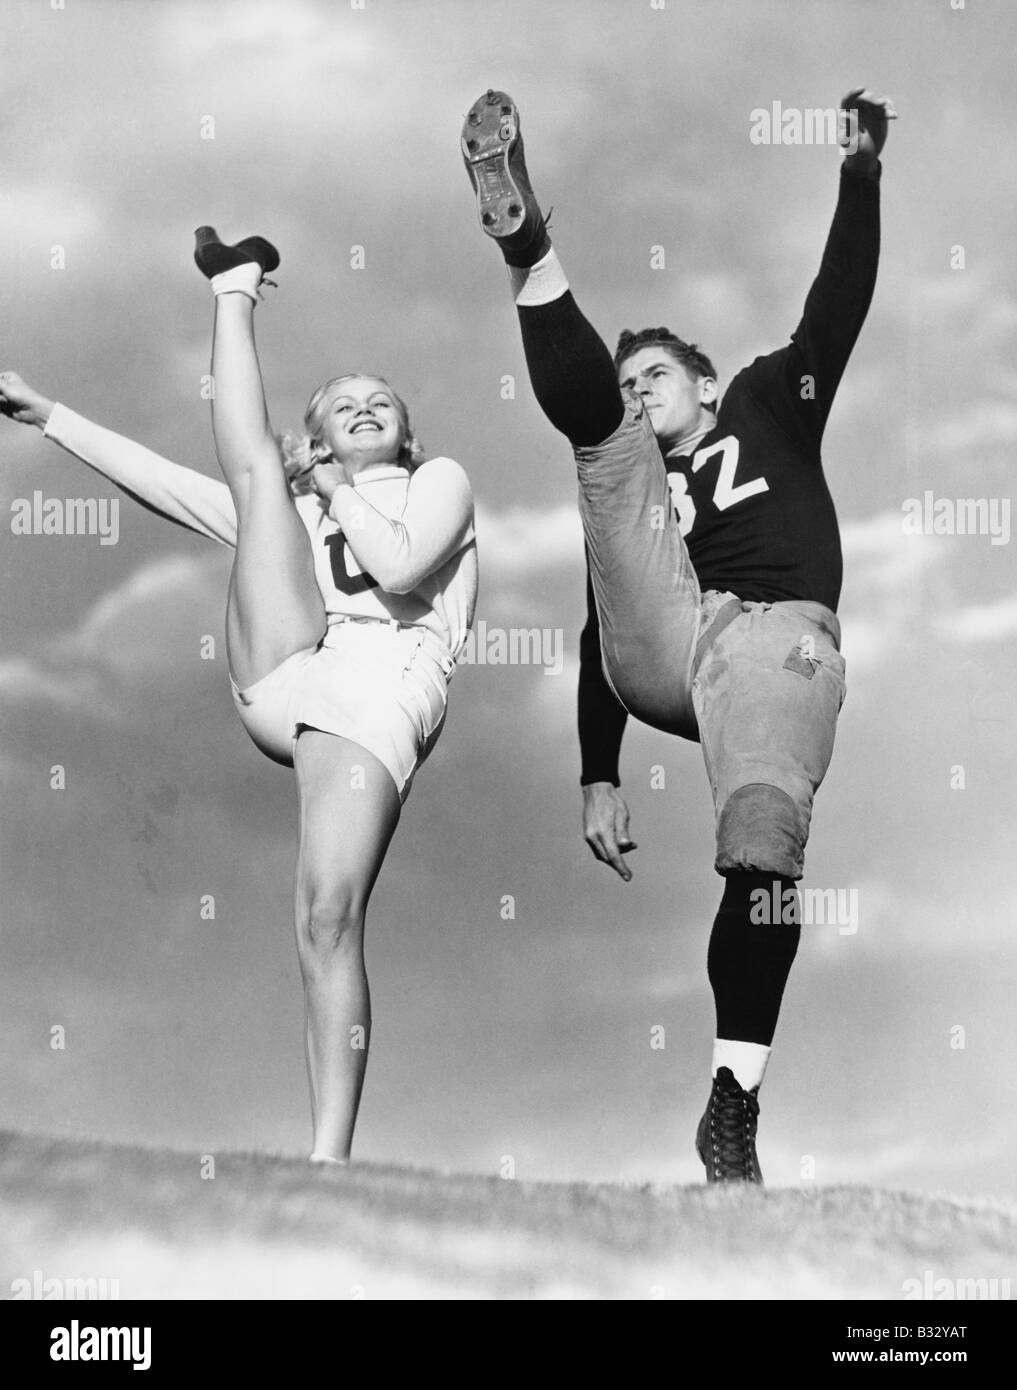 Cheerleader and football player kicking into the air Stock Photo